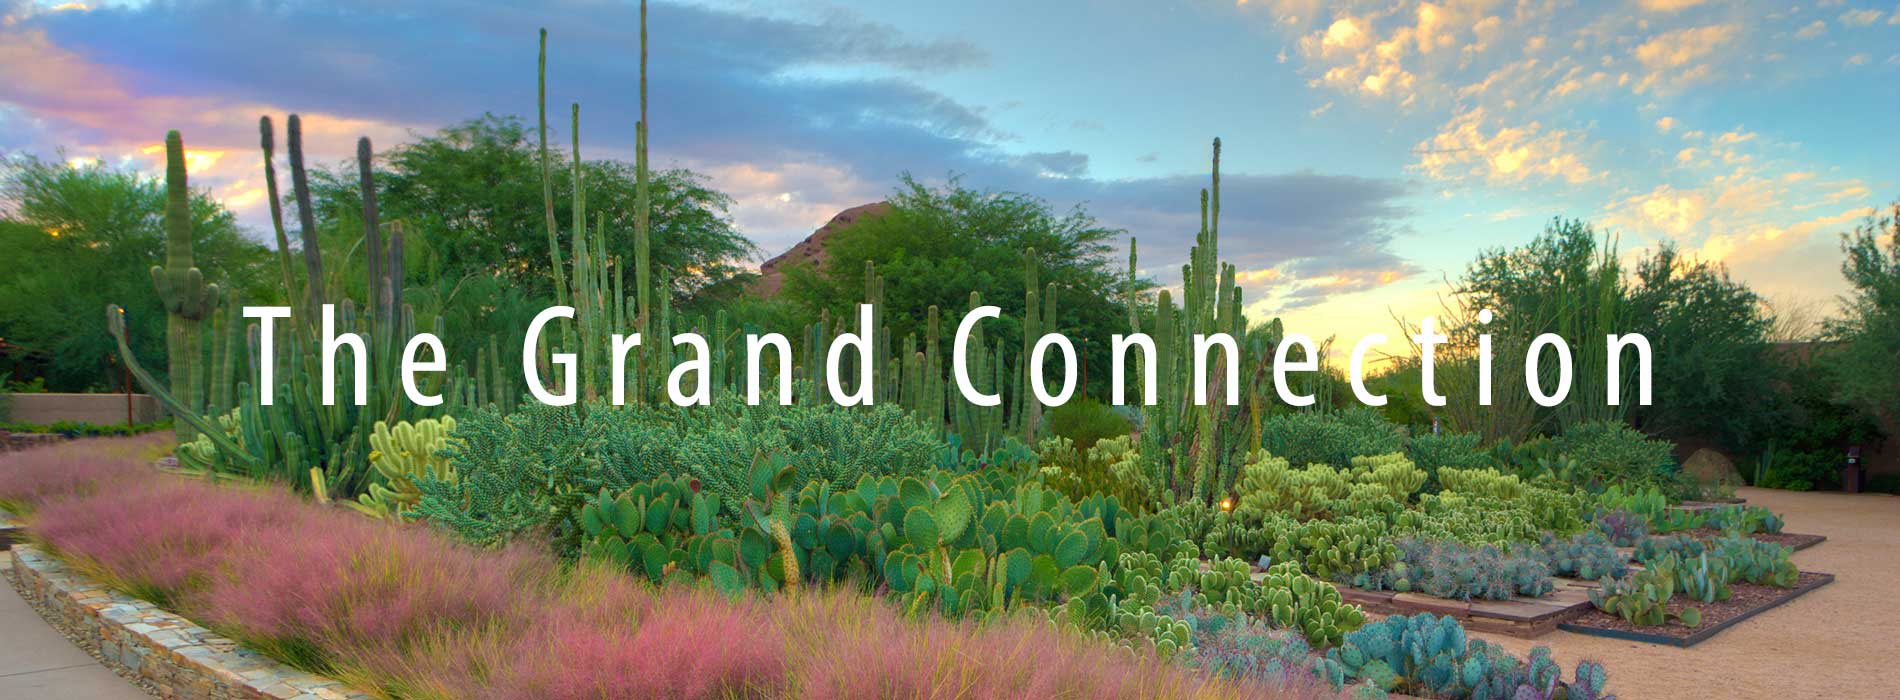 Desert_Botanical_Garden_Sized_web_profiles_3